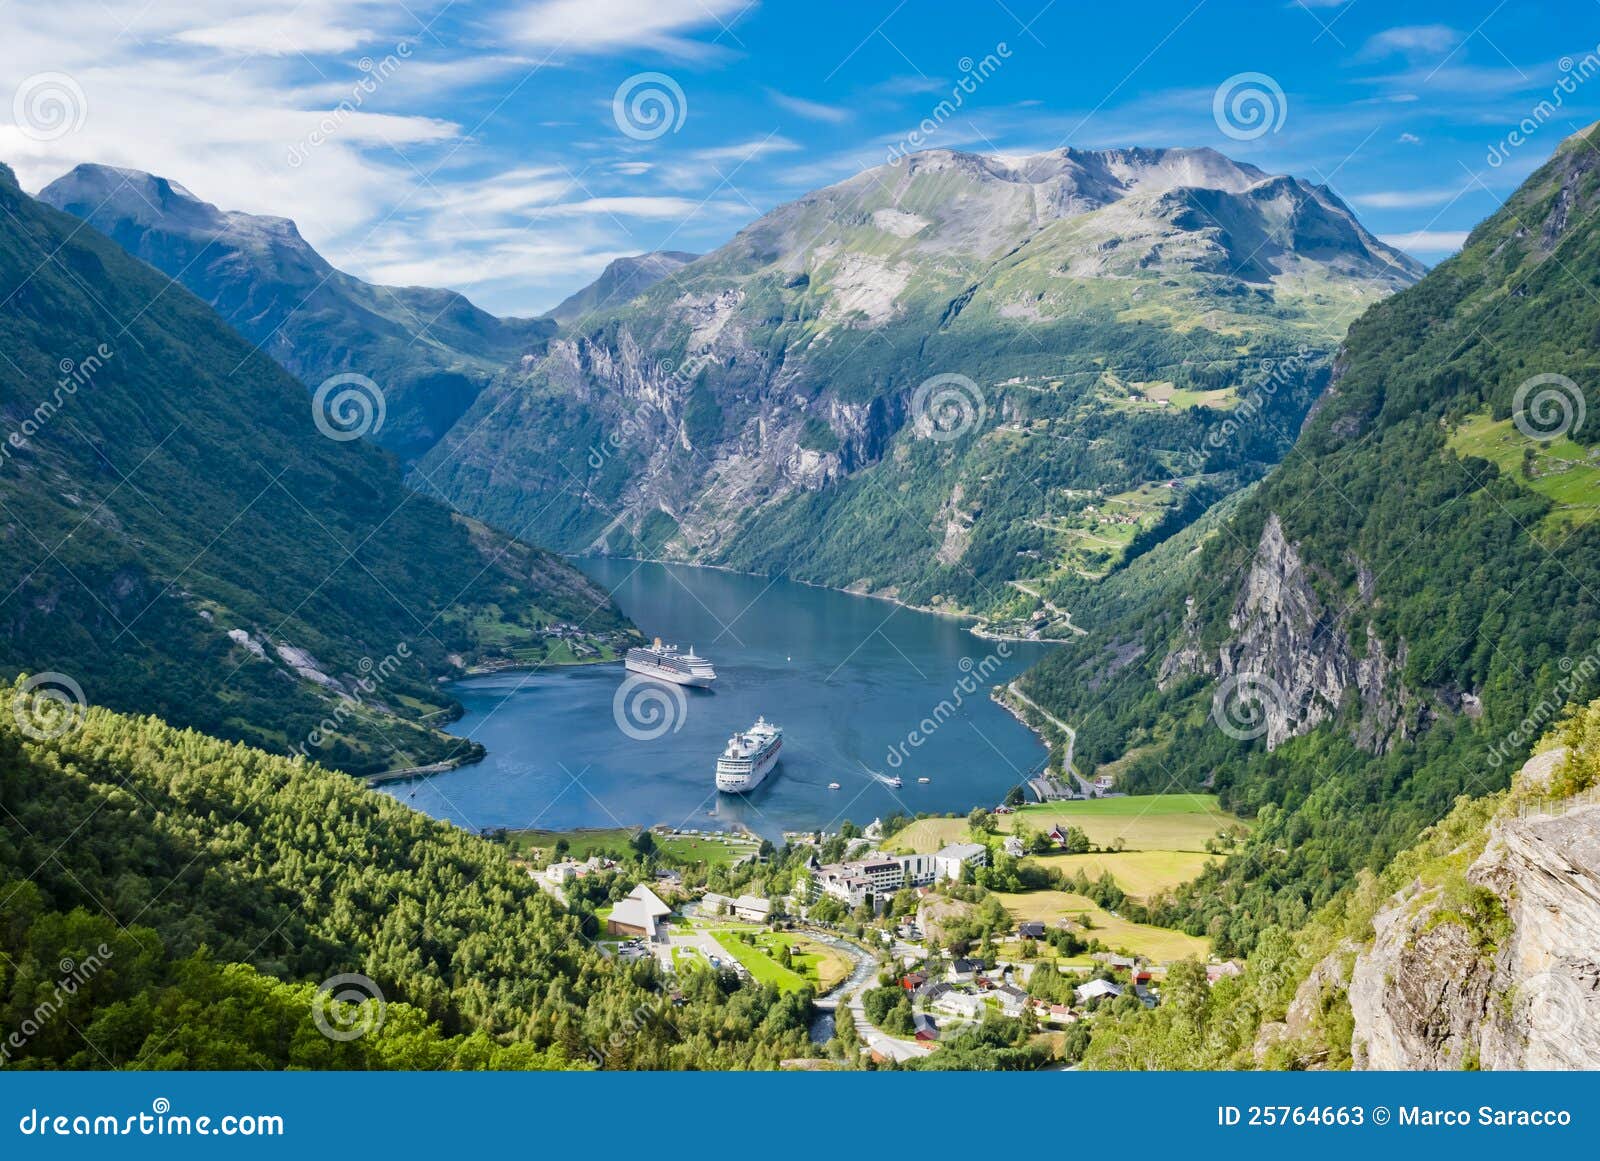 geiranger fjord, norway